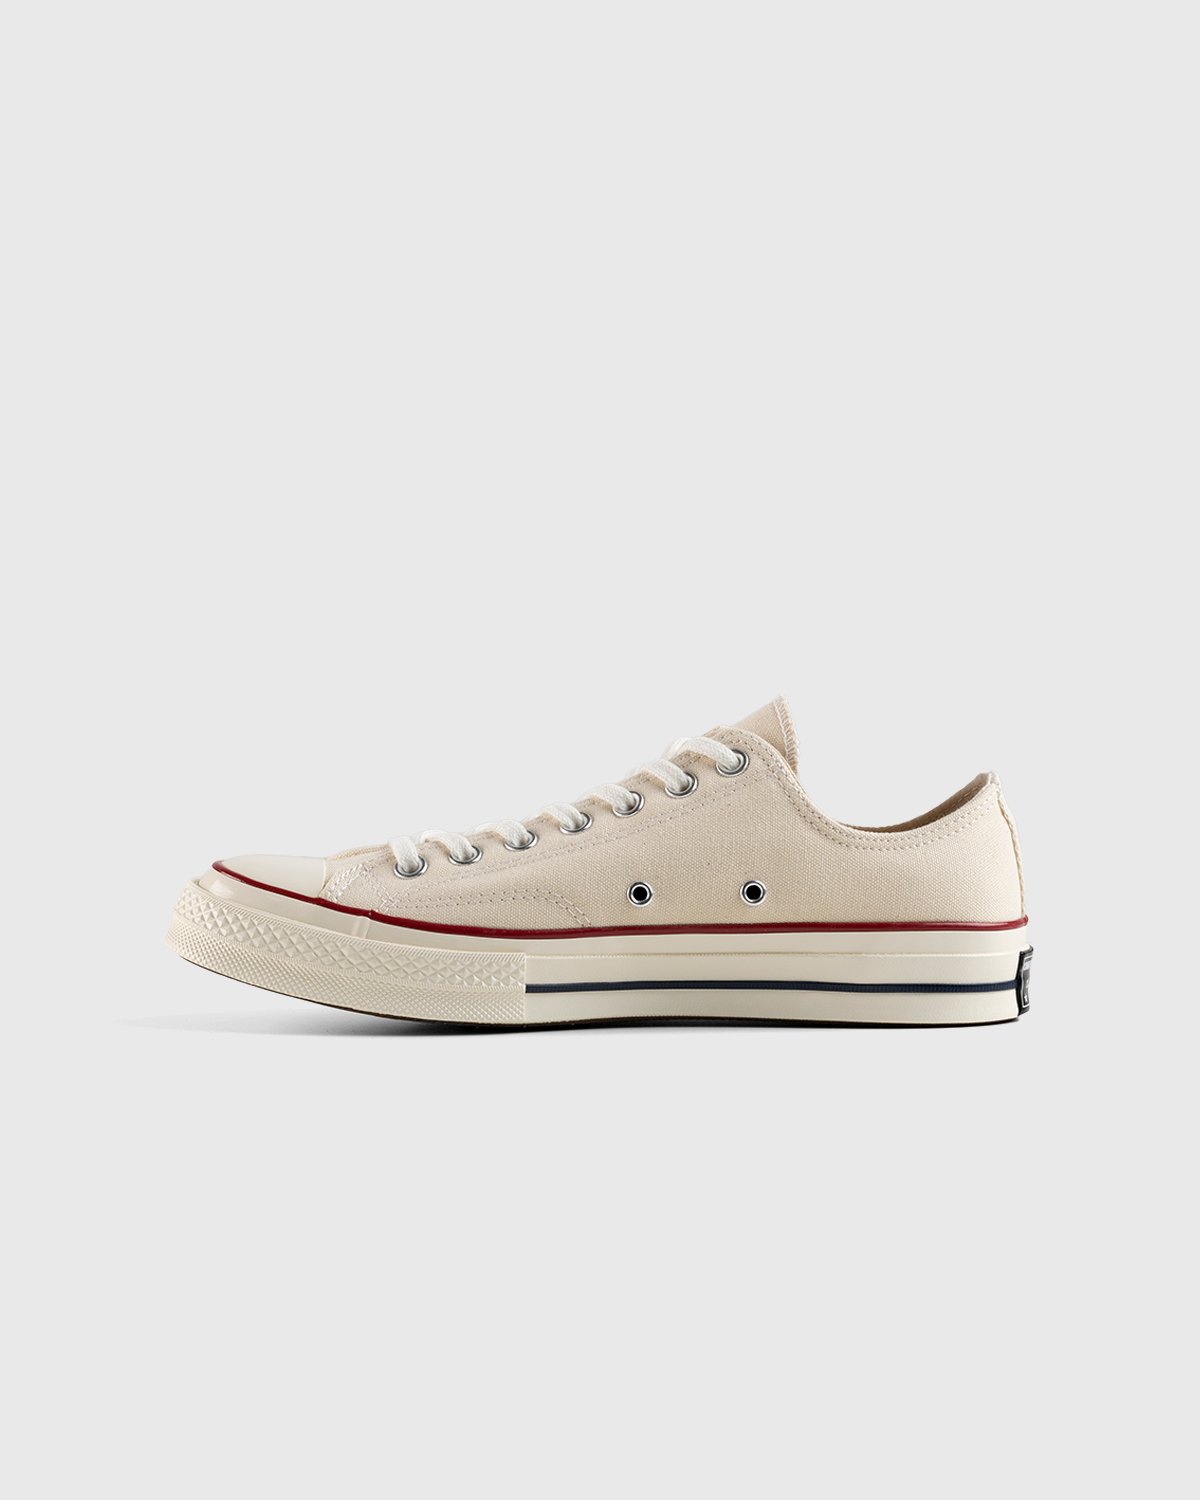 Converse - Chuck 70 Ox Parchment/Garnet/Egret - Footwear - Beige - Image 2